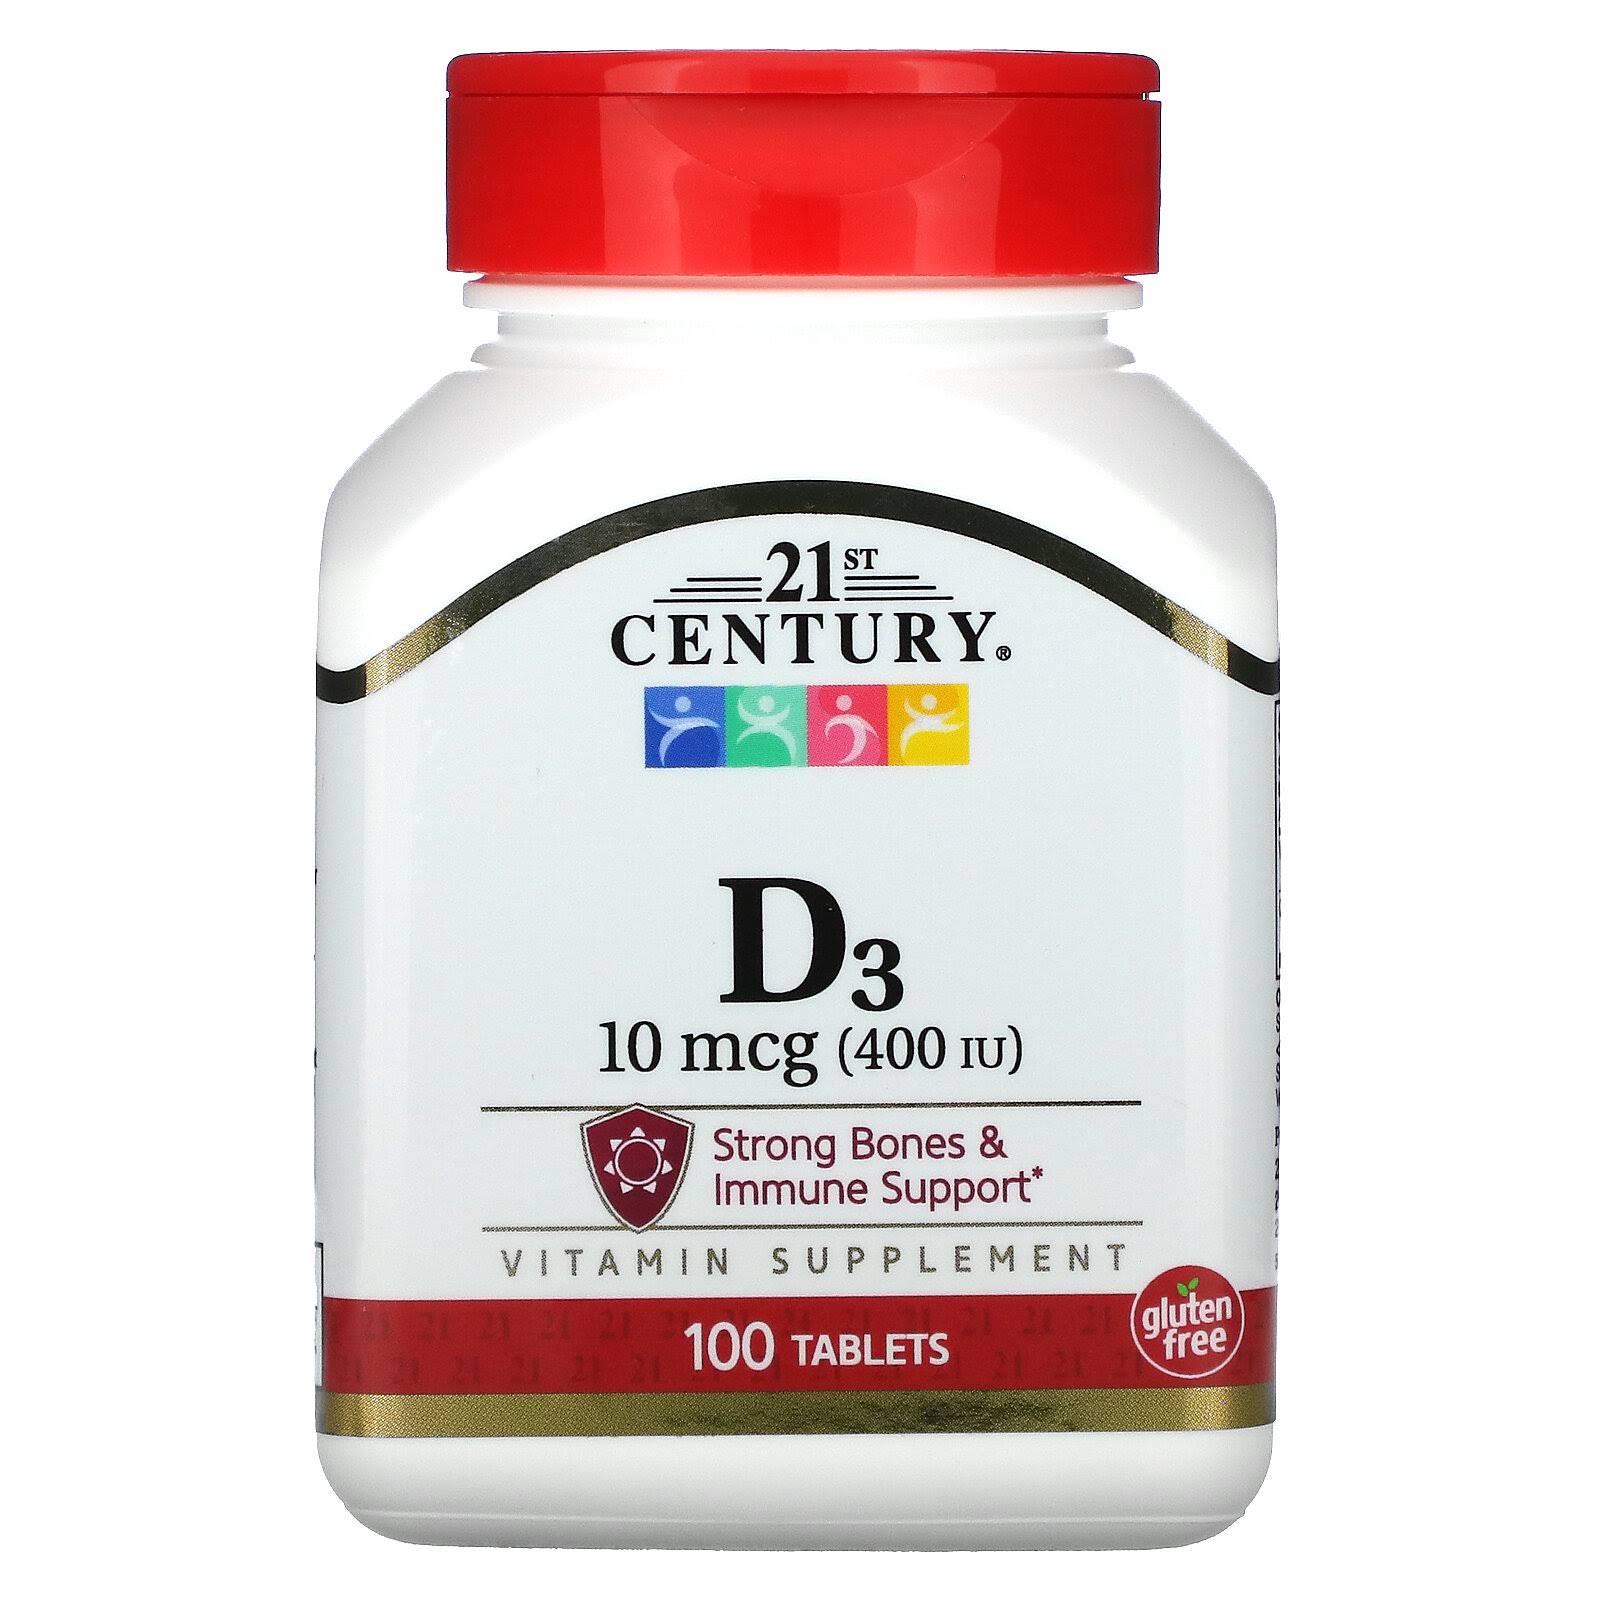 21ST Century D3-400 Dietary Supplement - 100Tabs